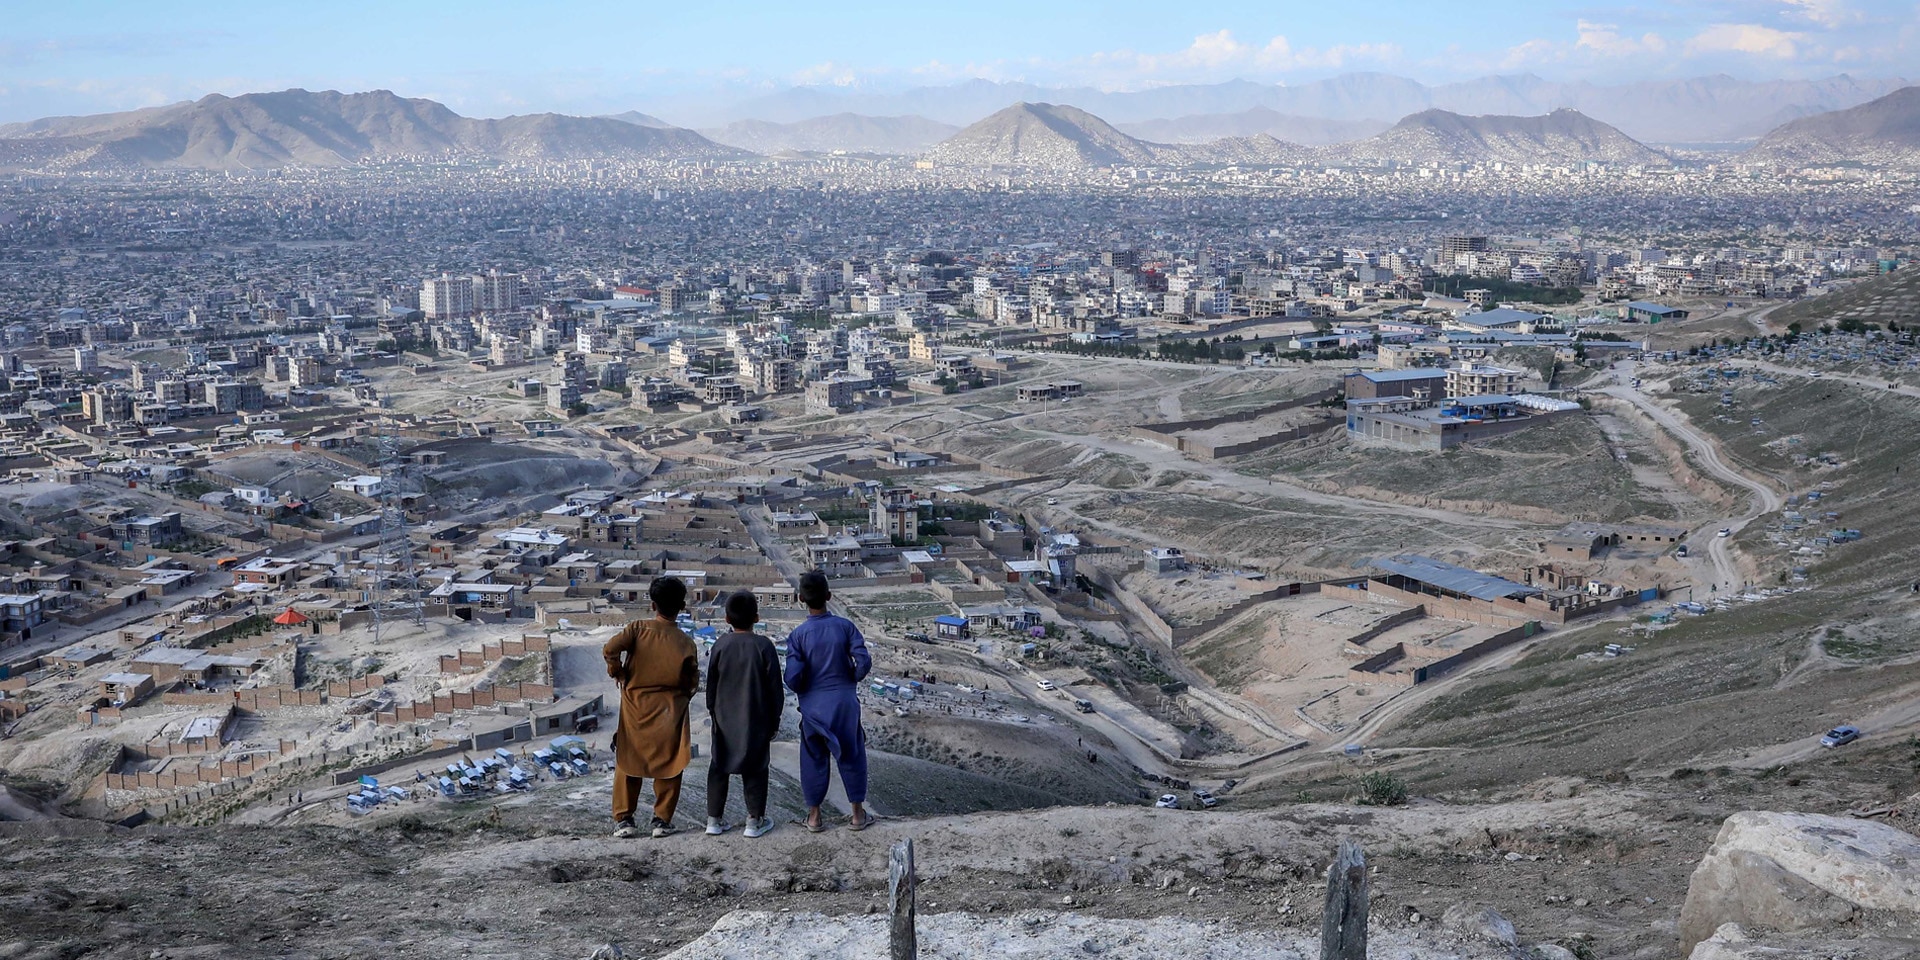  Tre bambini guardano la capitale afgana Kabul da una collina.